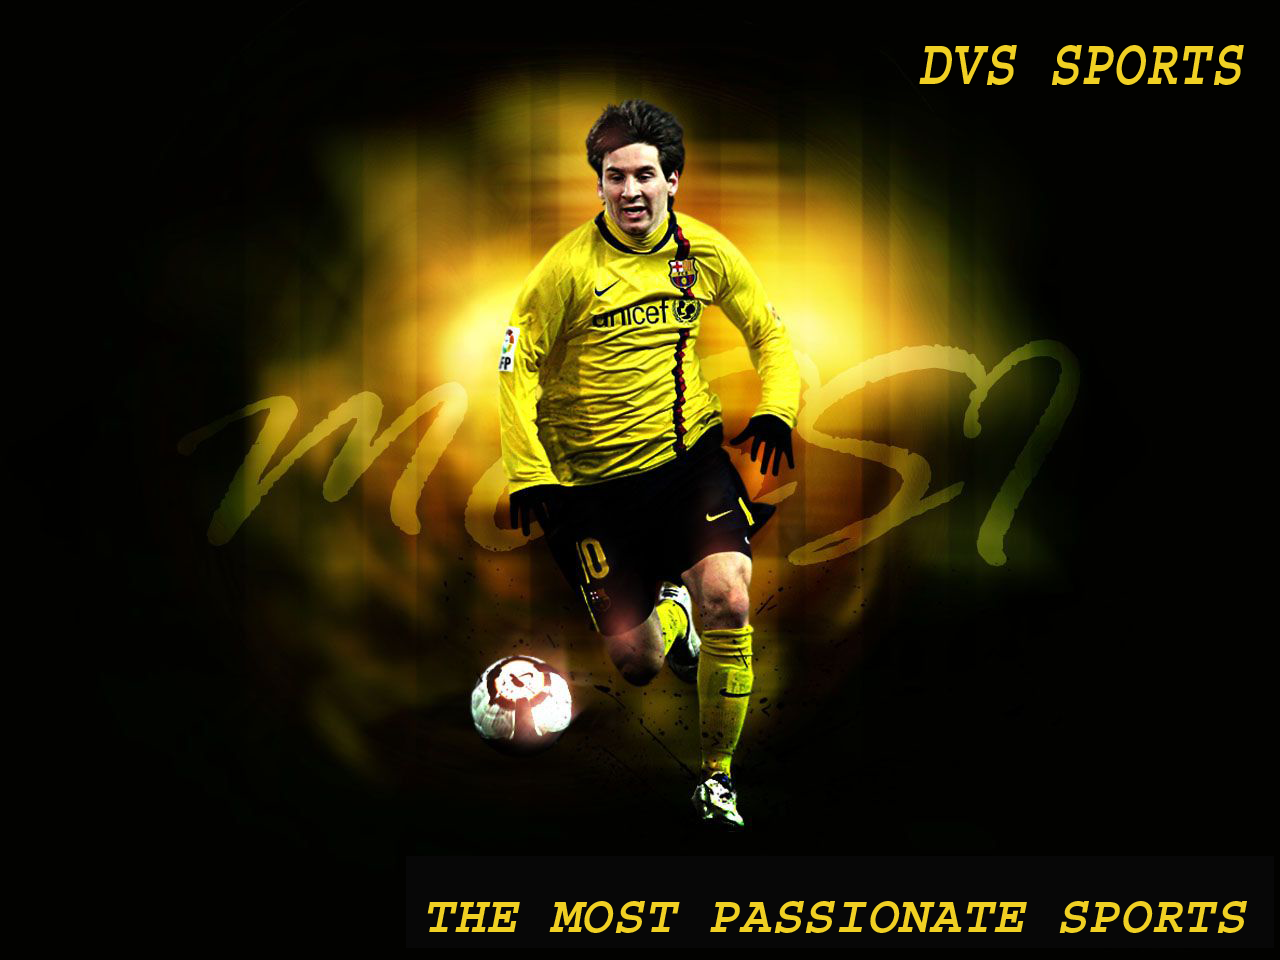 DVS Sport